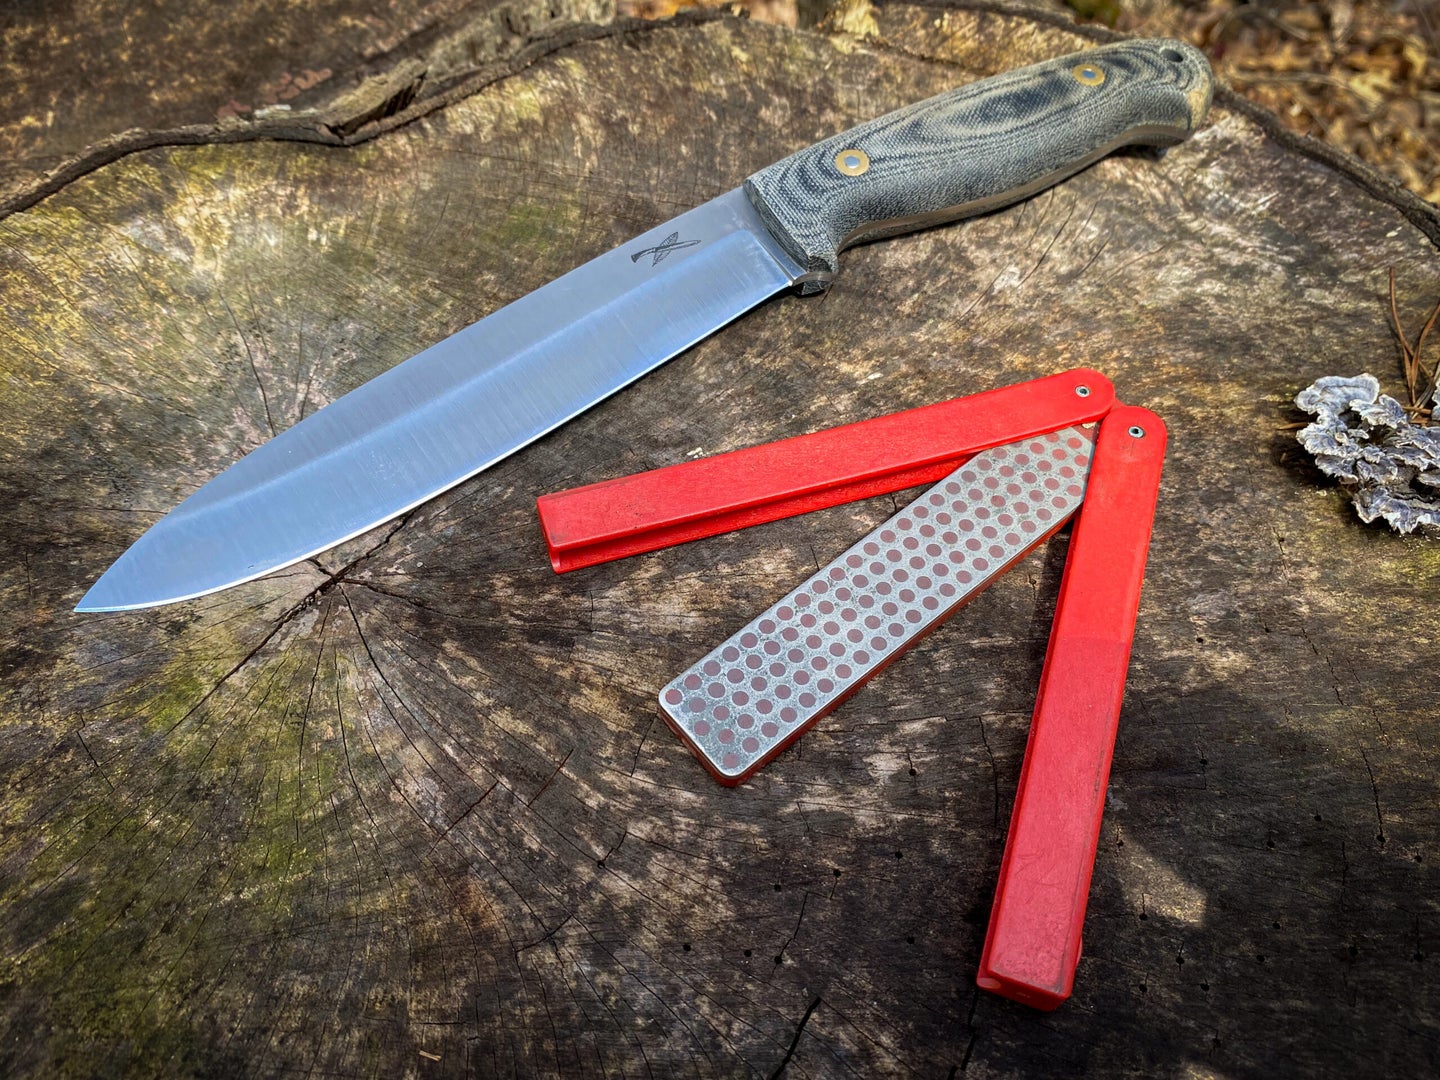 How To Make Any Knife Razor Sharp! - DIY Knife Sharpener 